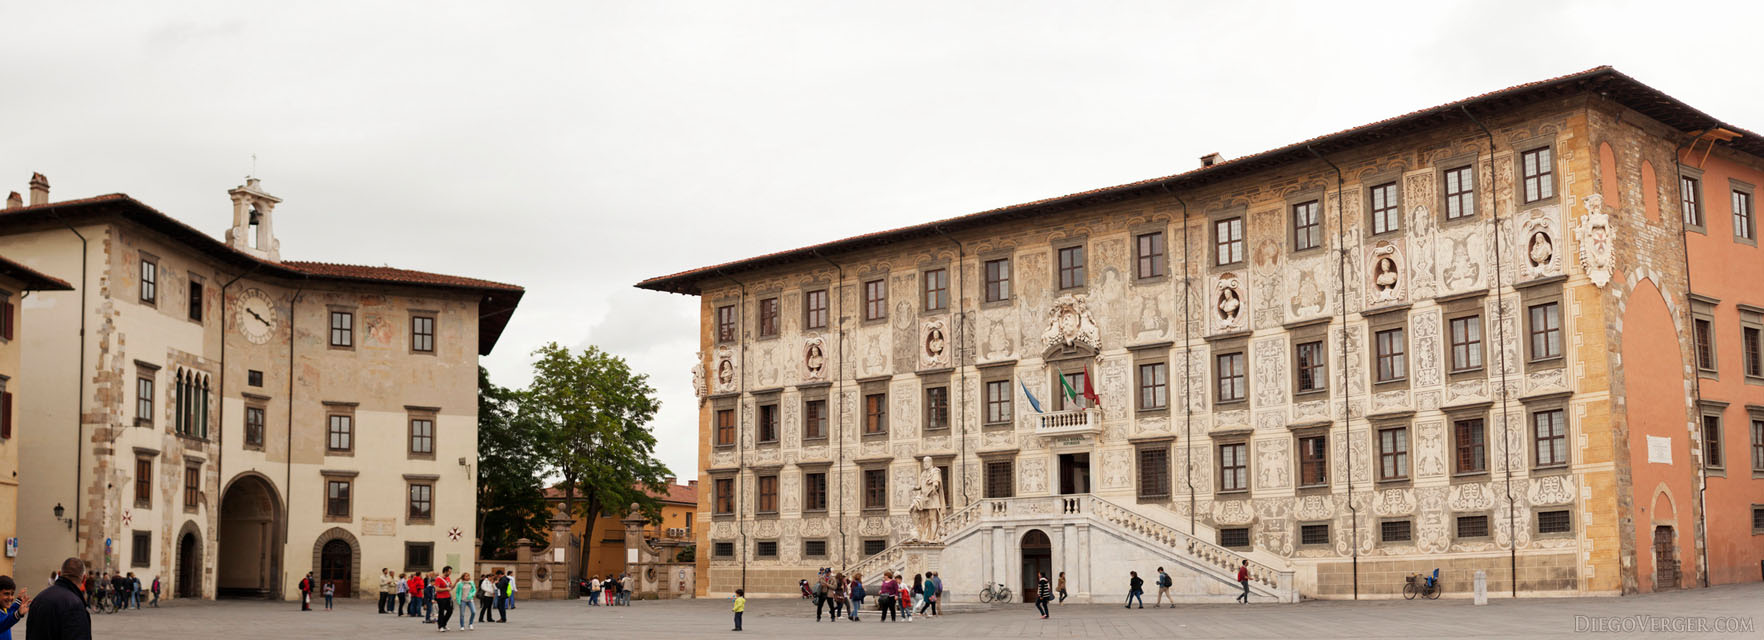 Vista panorámica de la Piazza dei Cavalieri